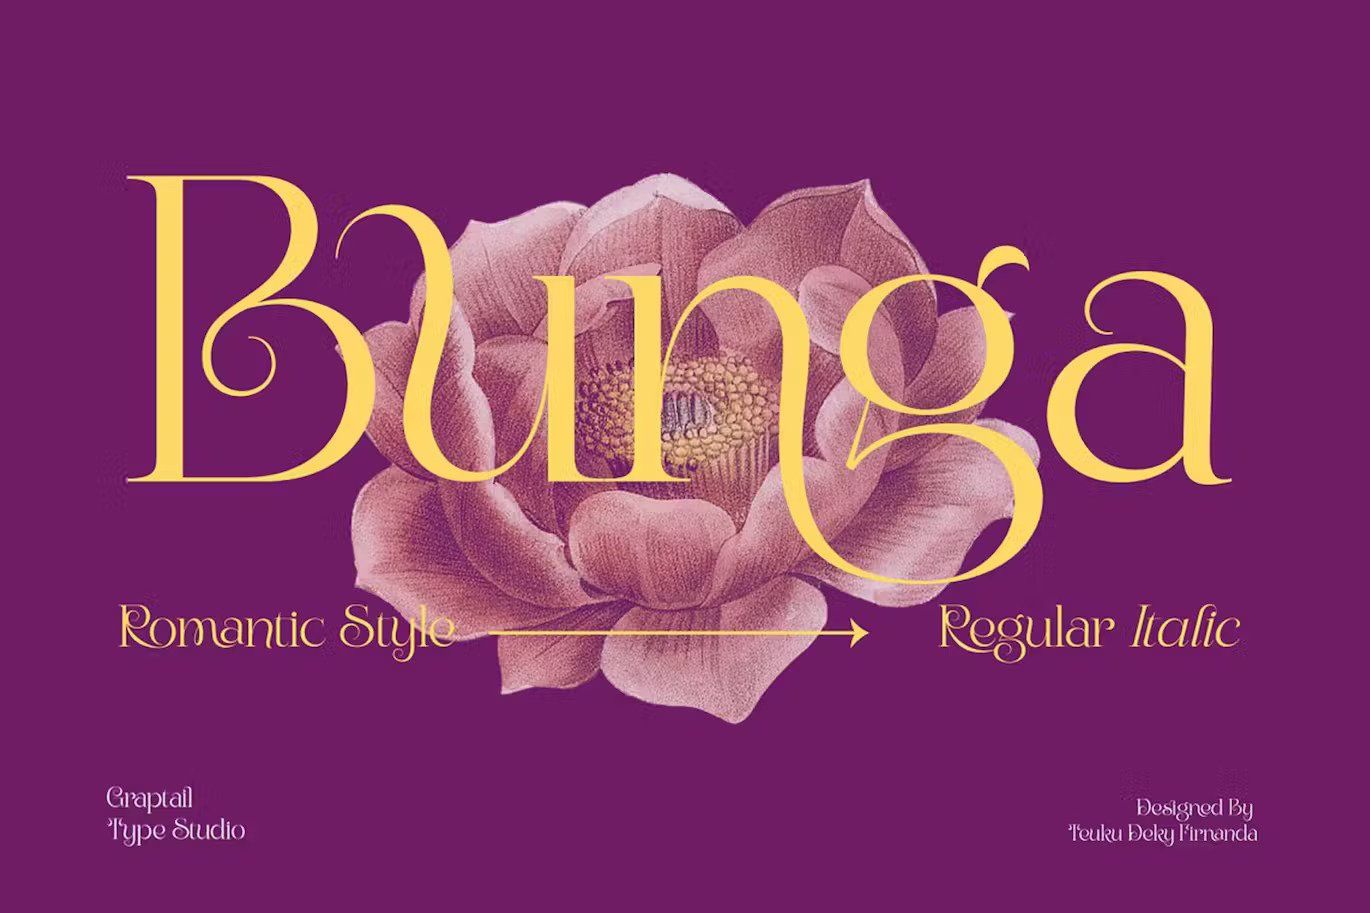 A romantic stylish typeface